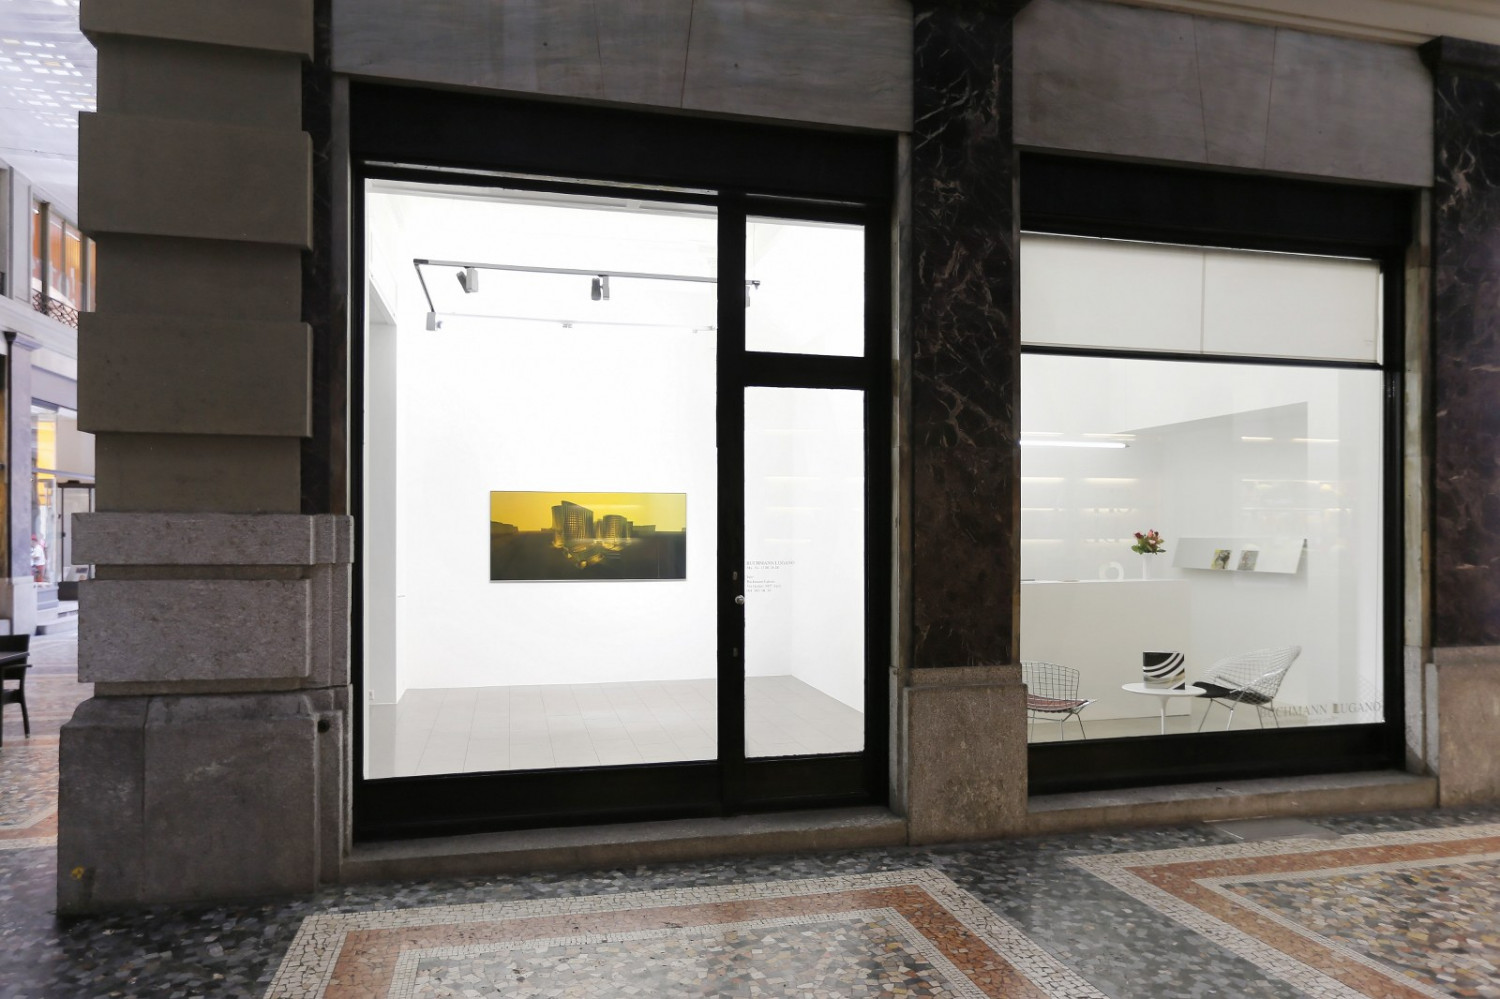 Zaha Hadid, ‘Landscape?’, Installation view, Buchmann Lugano